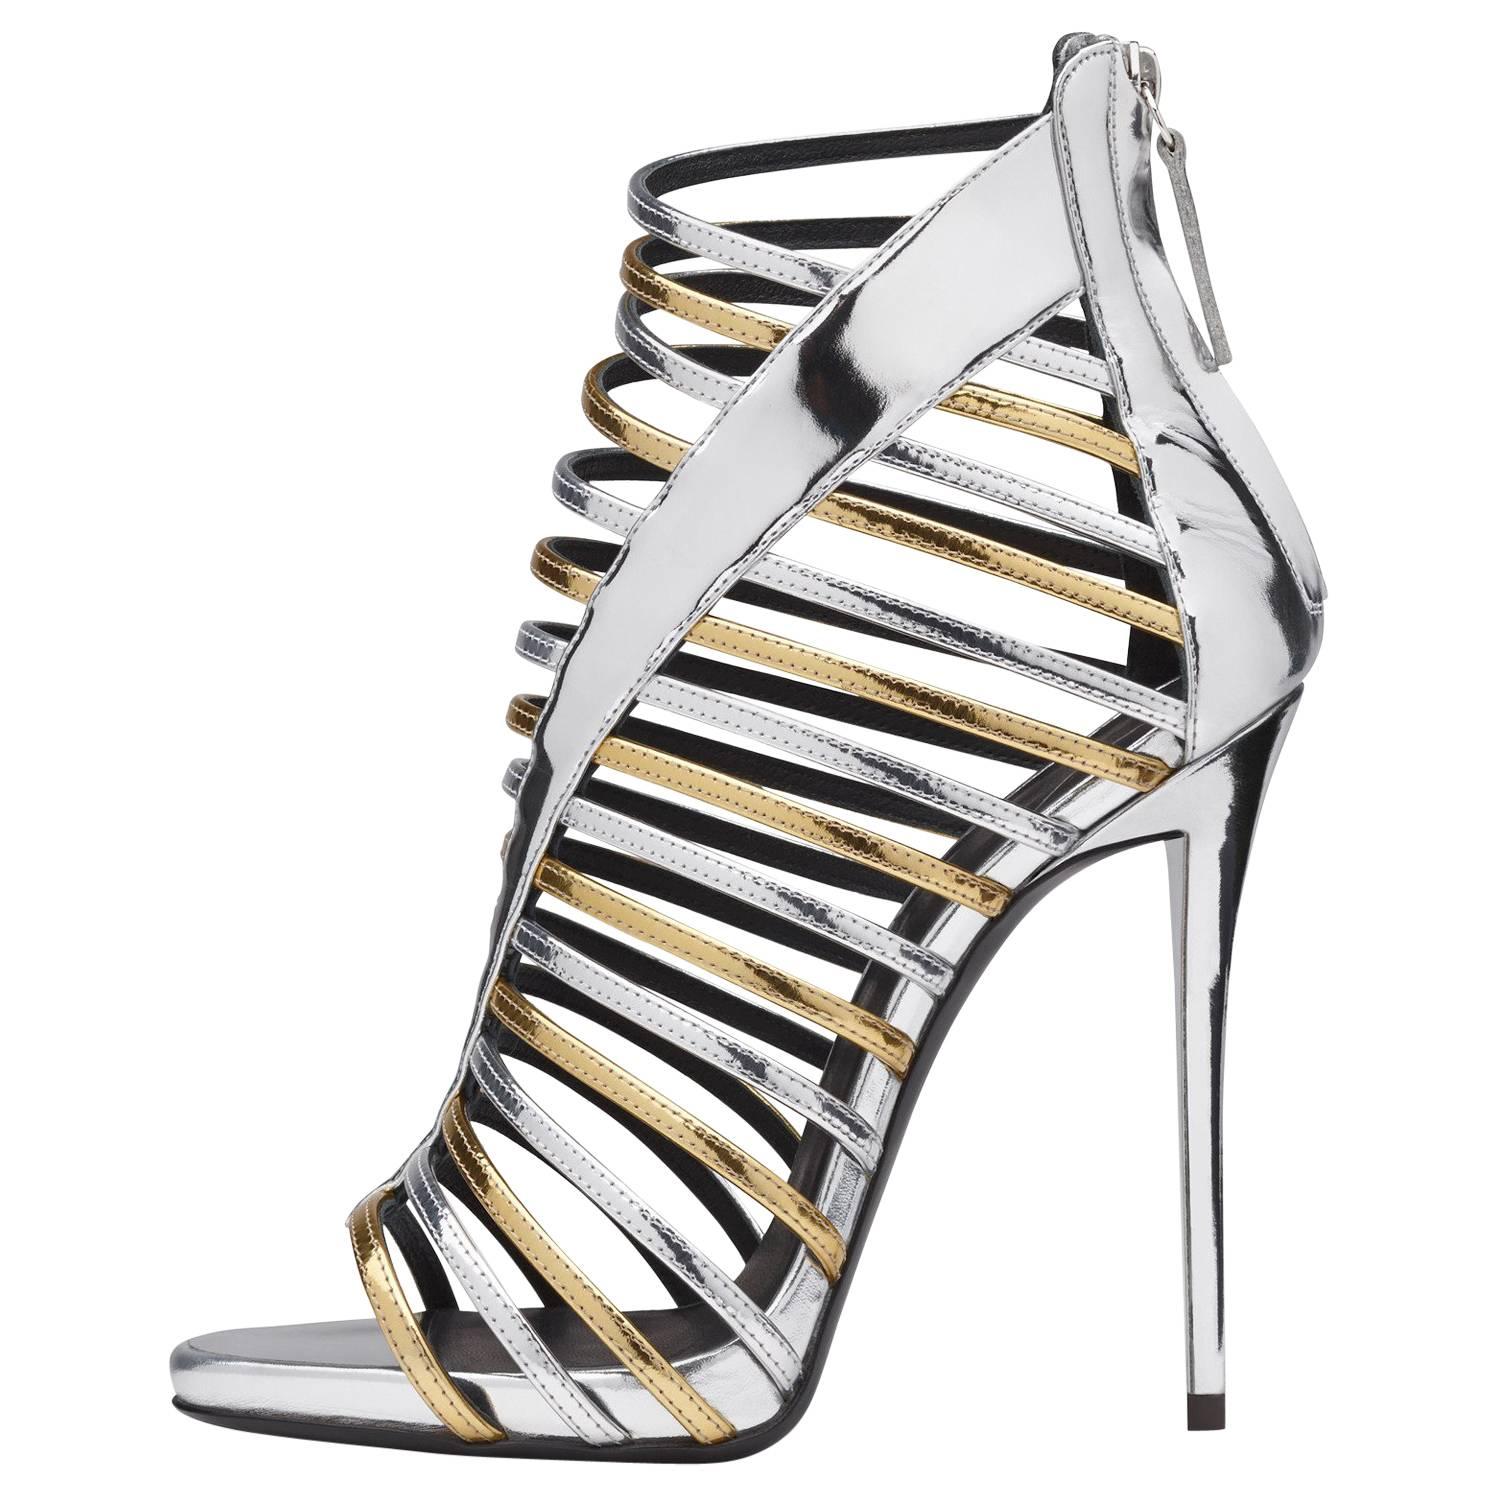 Giuseppe Zanotti New Gold Silver Patent Gladiator Evening Sandals Heels in Box